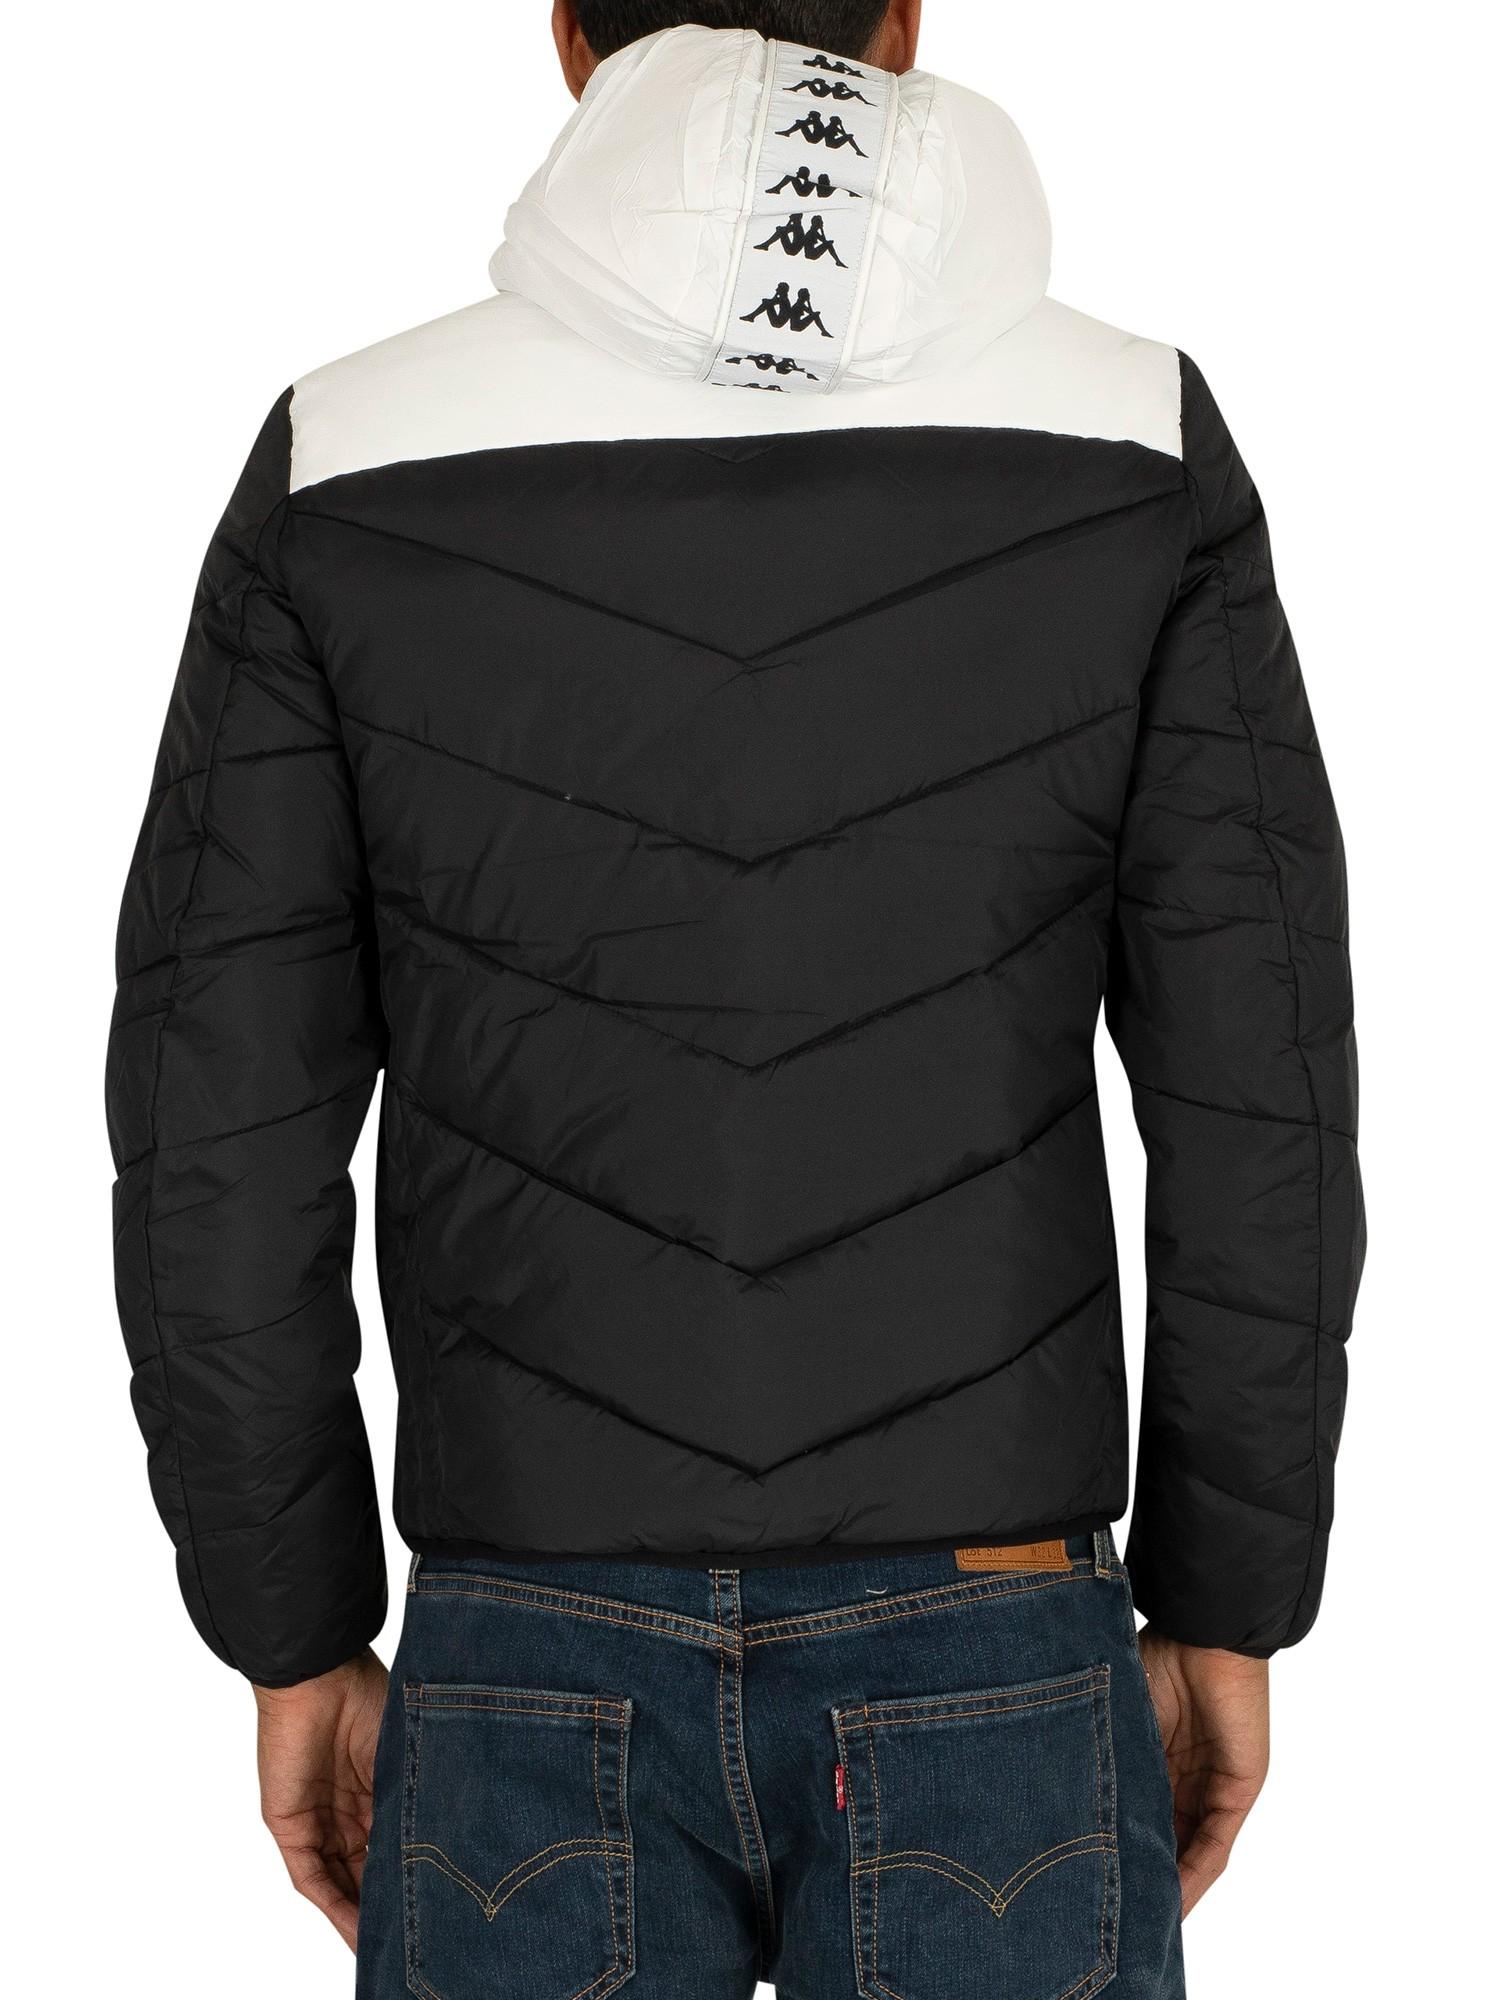 Kappa 222 Banda Amarit Puffer Jacket in Black/White (Black) for Men | Lyst